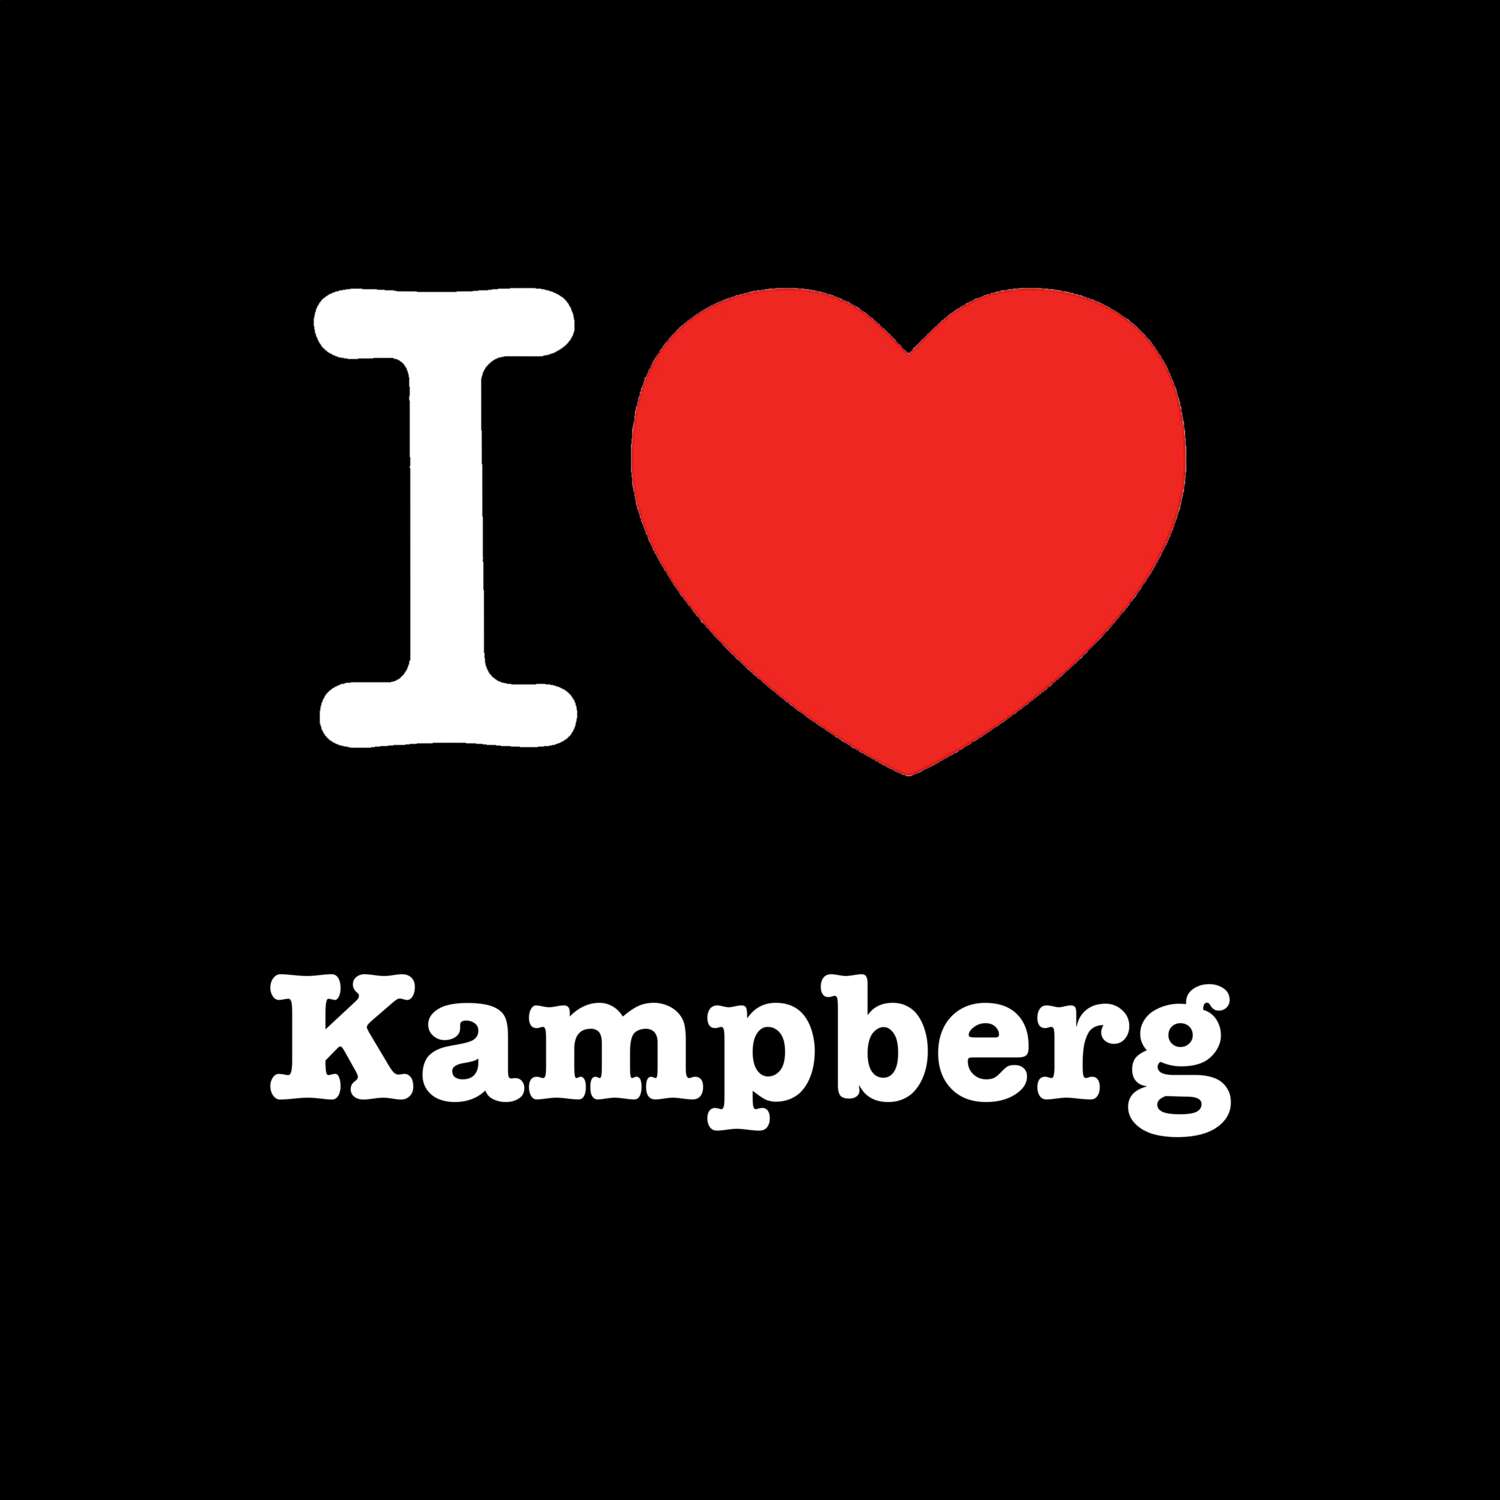 Kampberg T-Shirt »I love«